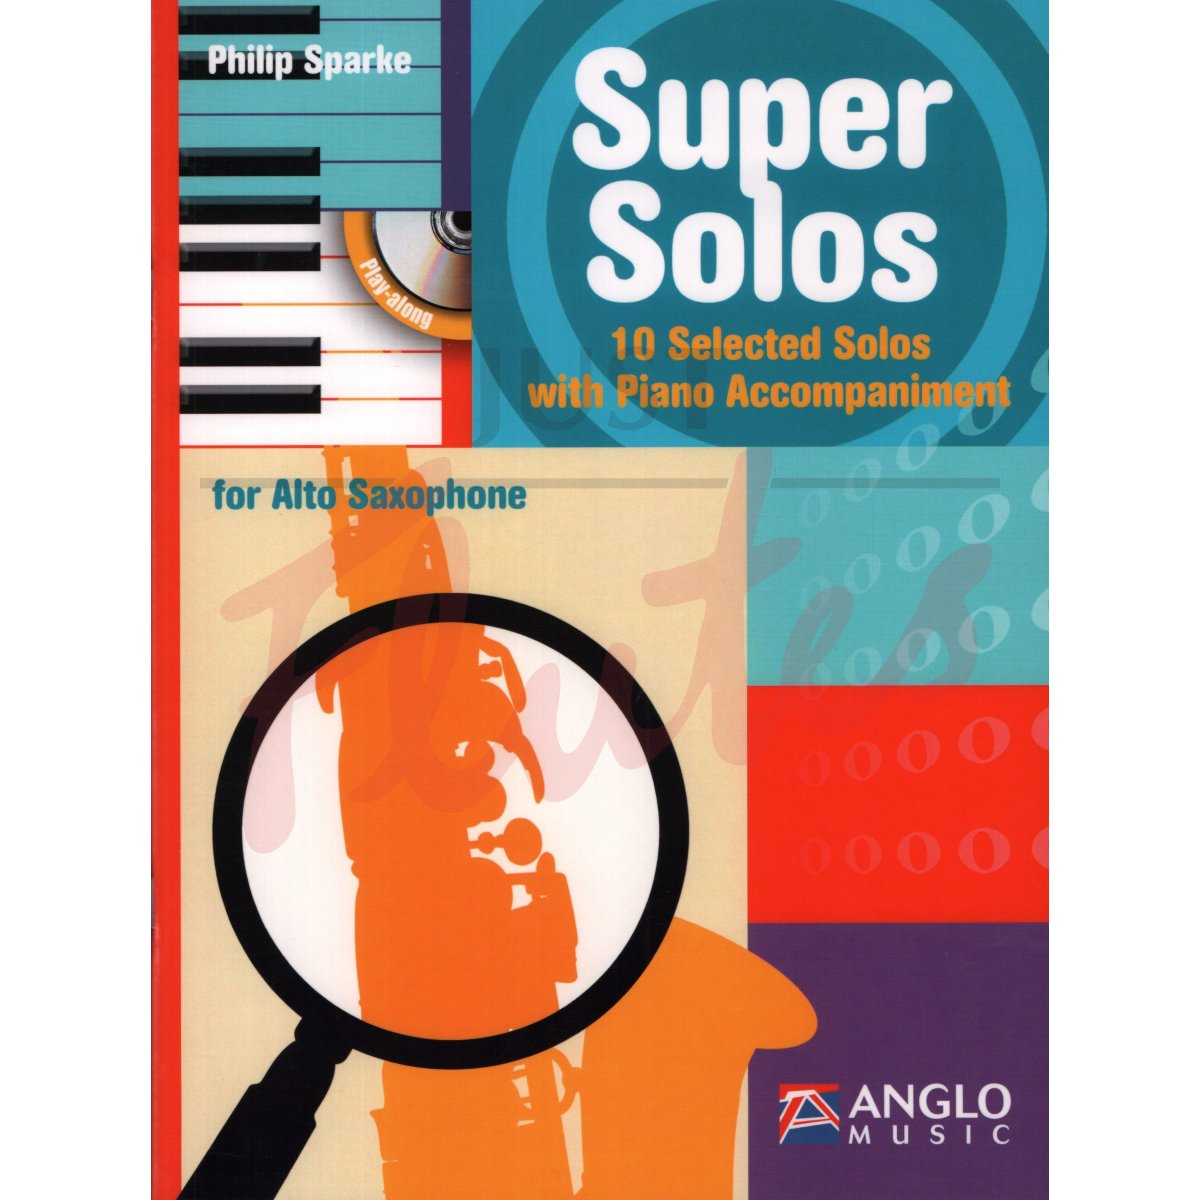 Super Solos for Alto Saxophone and Piano